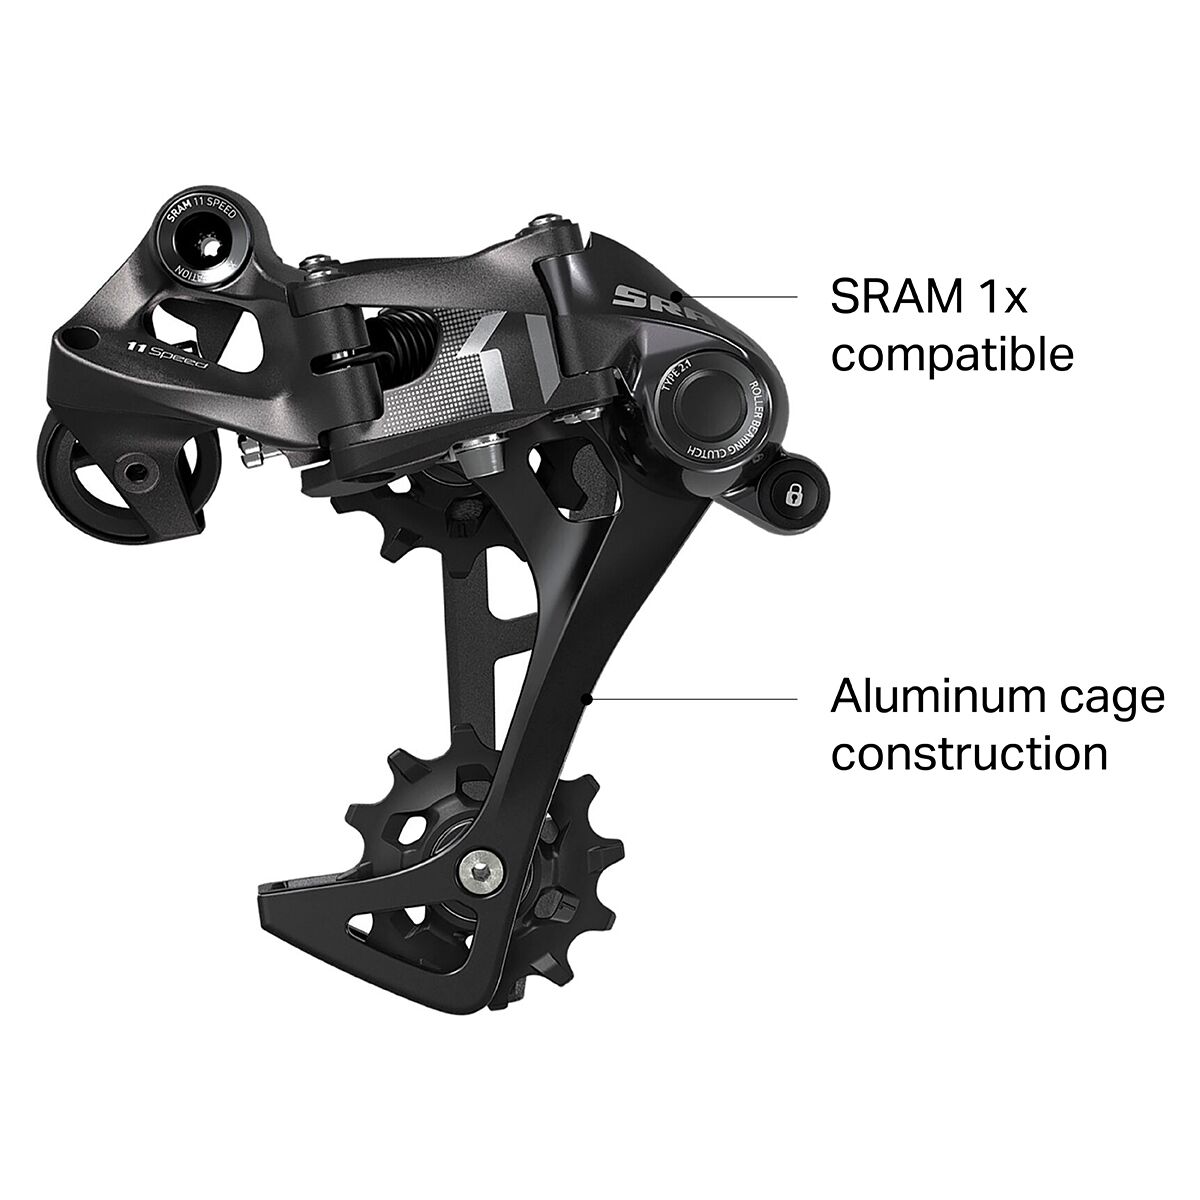 SRAM X1, 11-скоростной задний переключатель, тип 2.1 SRAM